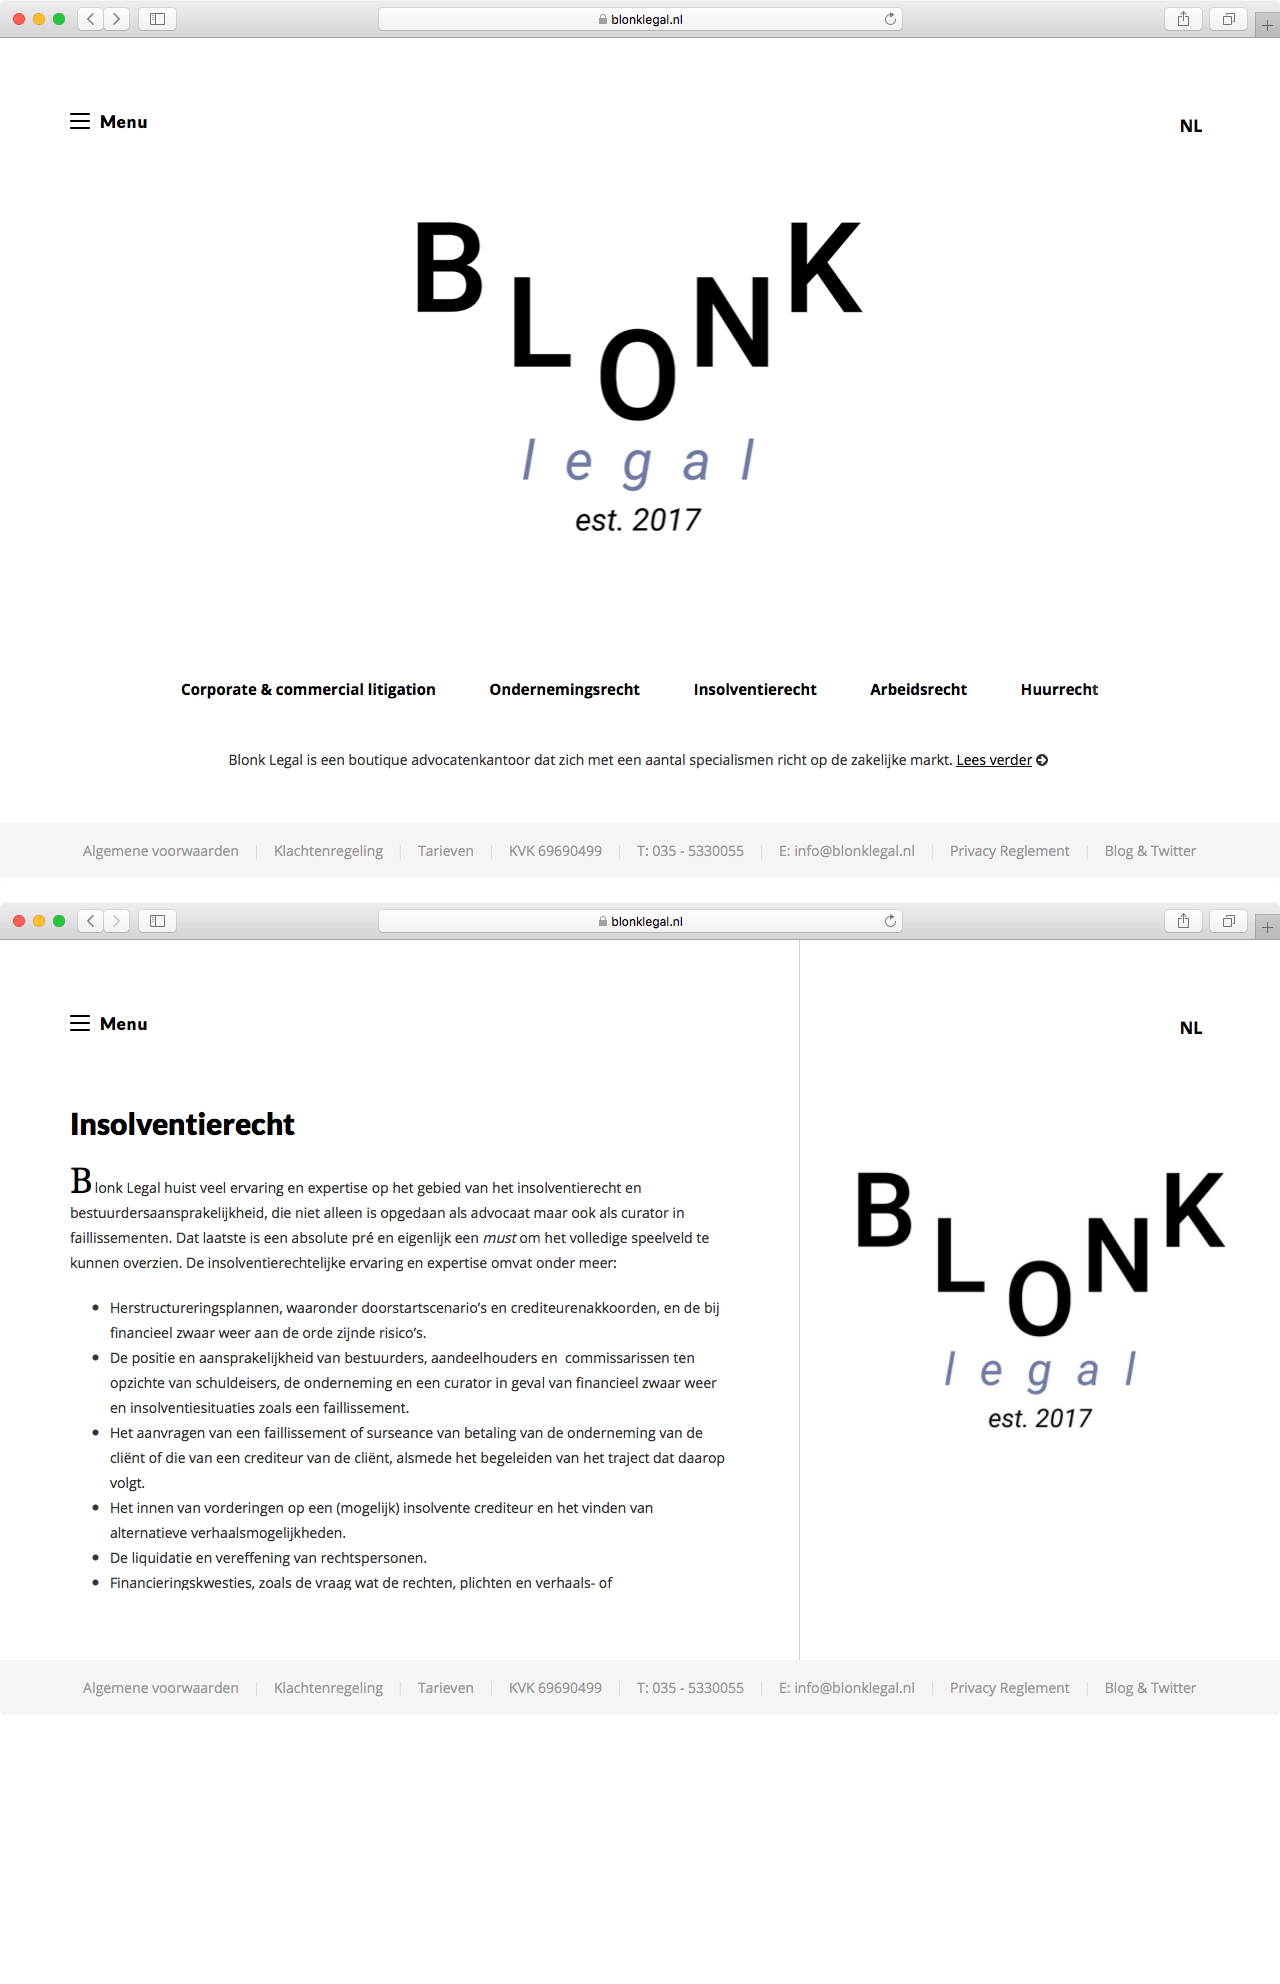 Blonk Legal